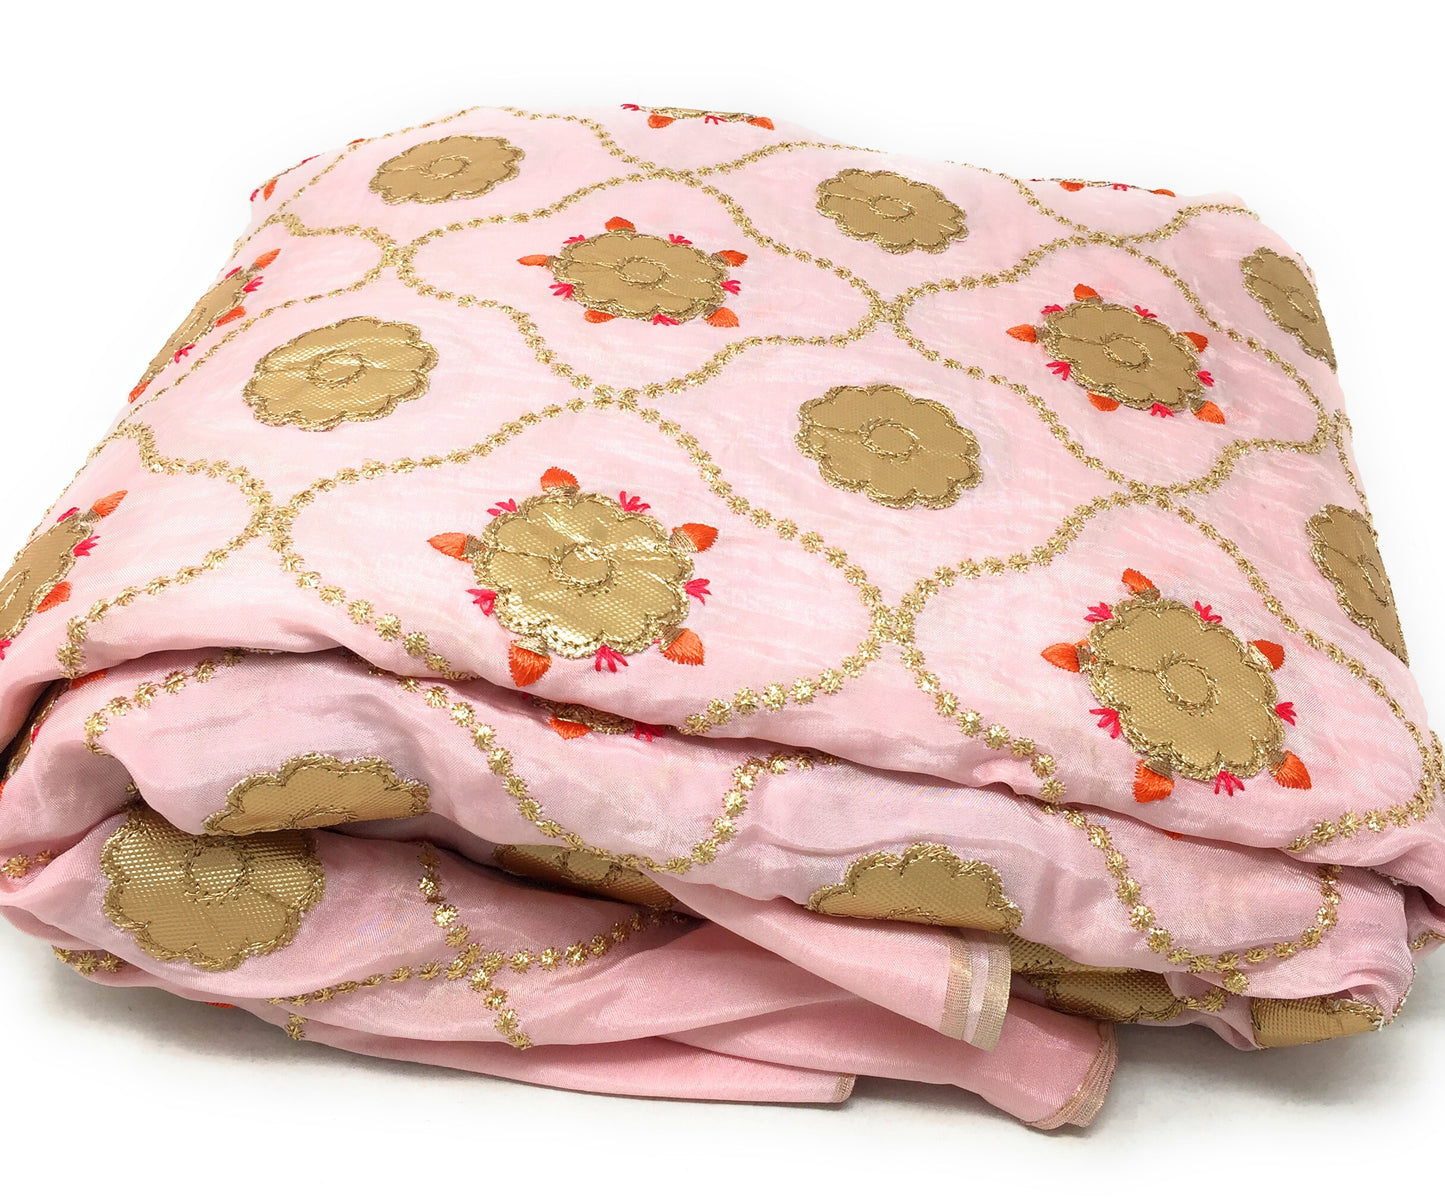 Light Pink Fabric With Gota Patti Embroidery